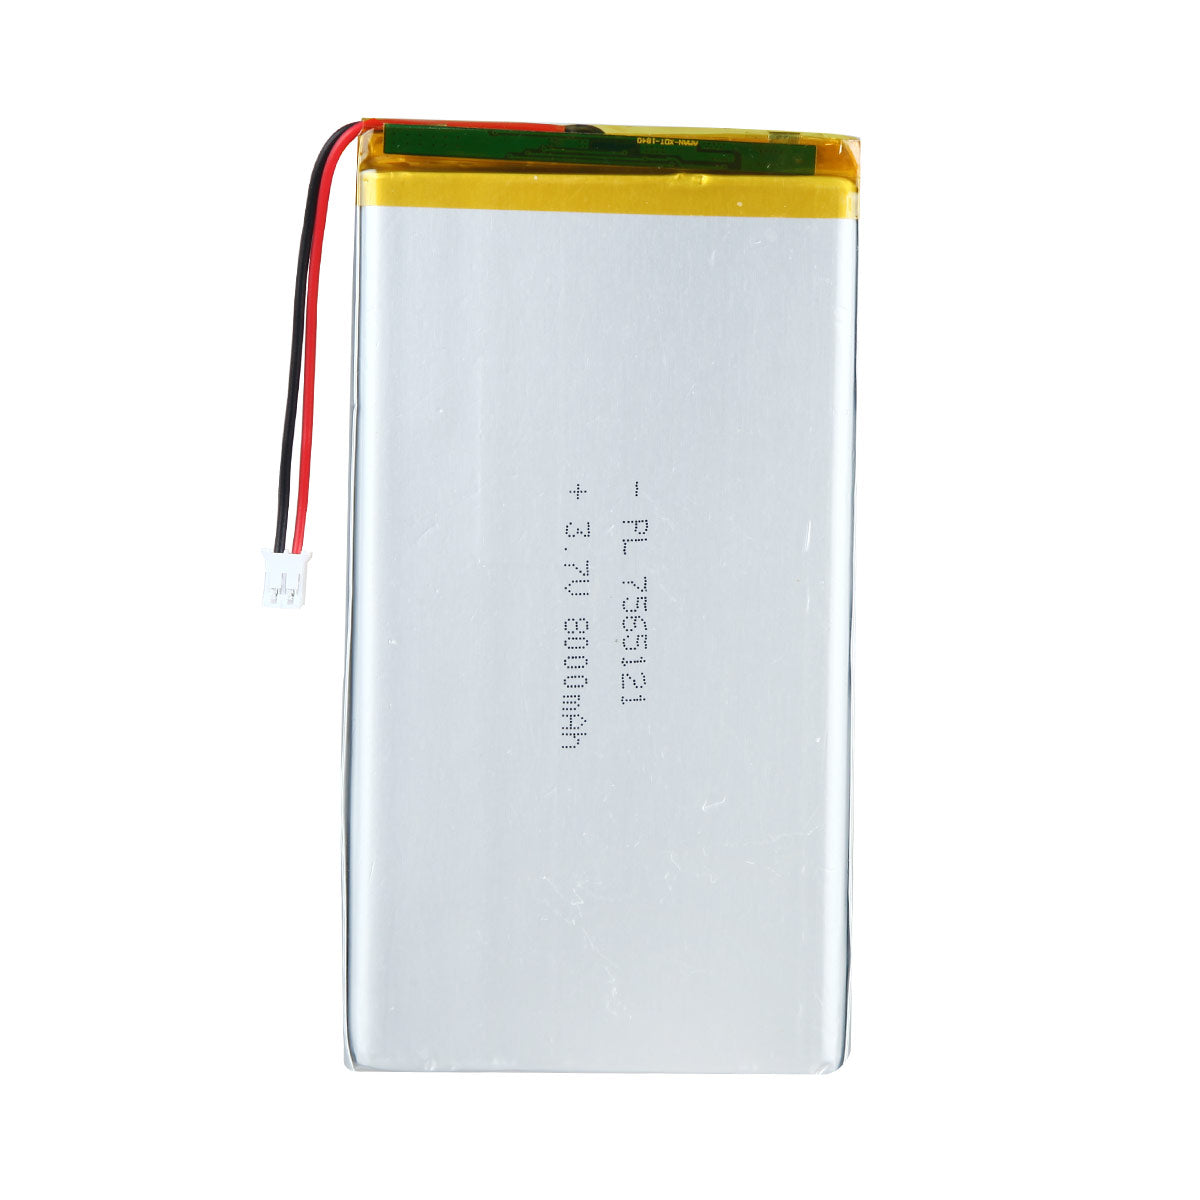 YDL 3.7V 8000mAh 7565121 Batterie Lithium Polymère Rechargeable Longueur 123mm